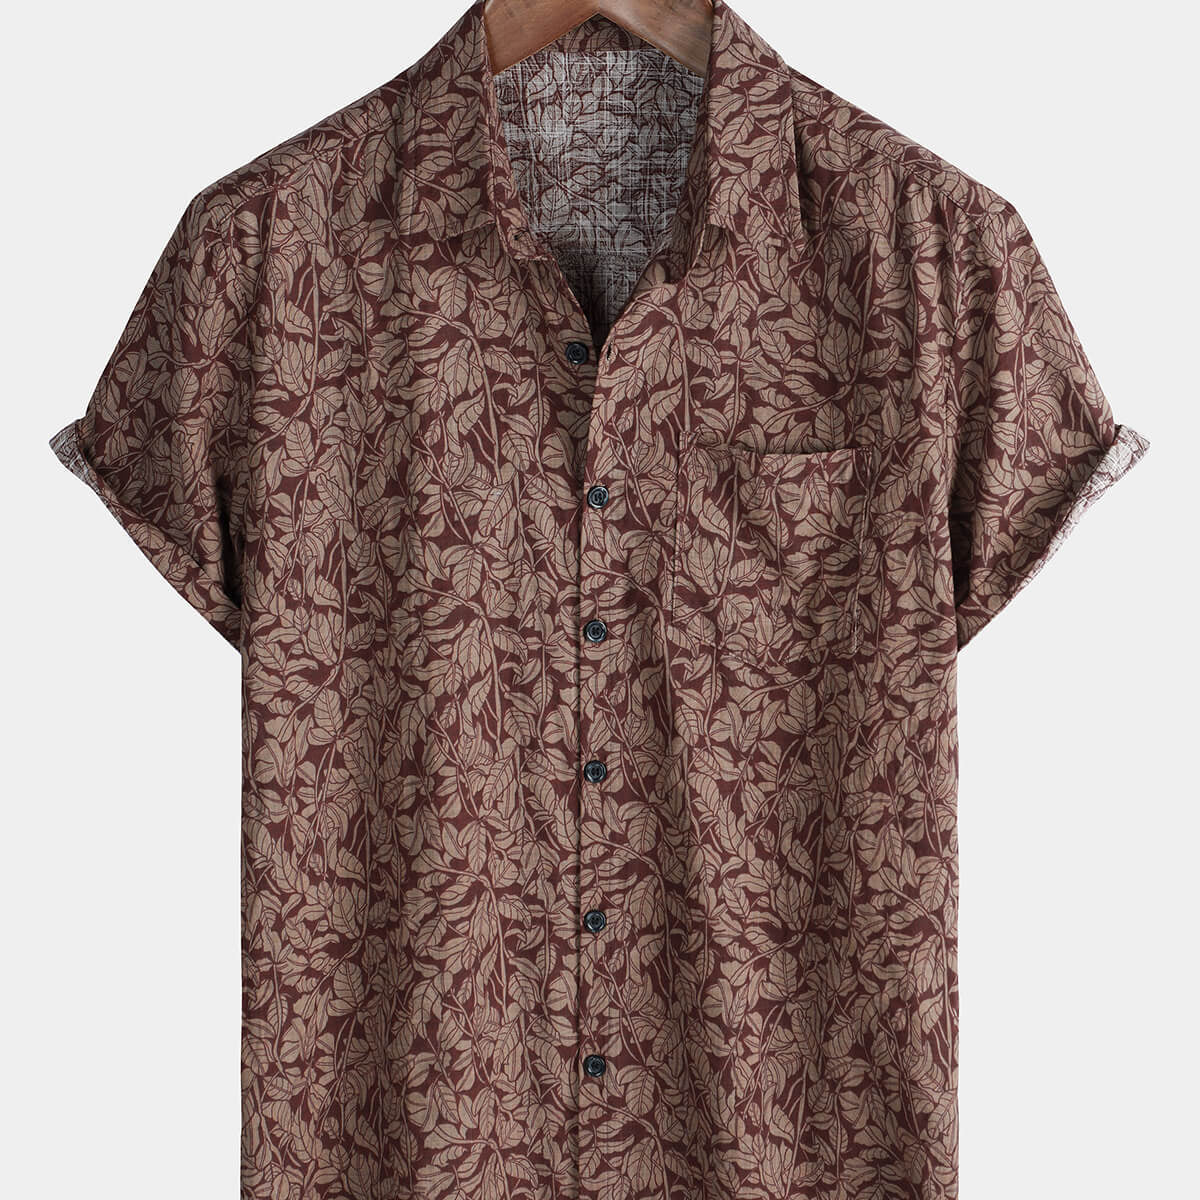 Men's Vintage Pocket Holiday Cotton Button Up Short Sleeve Shirt